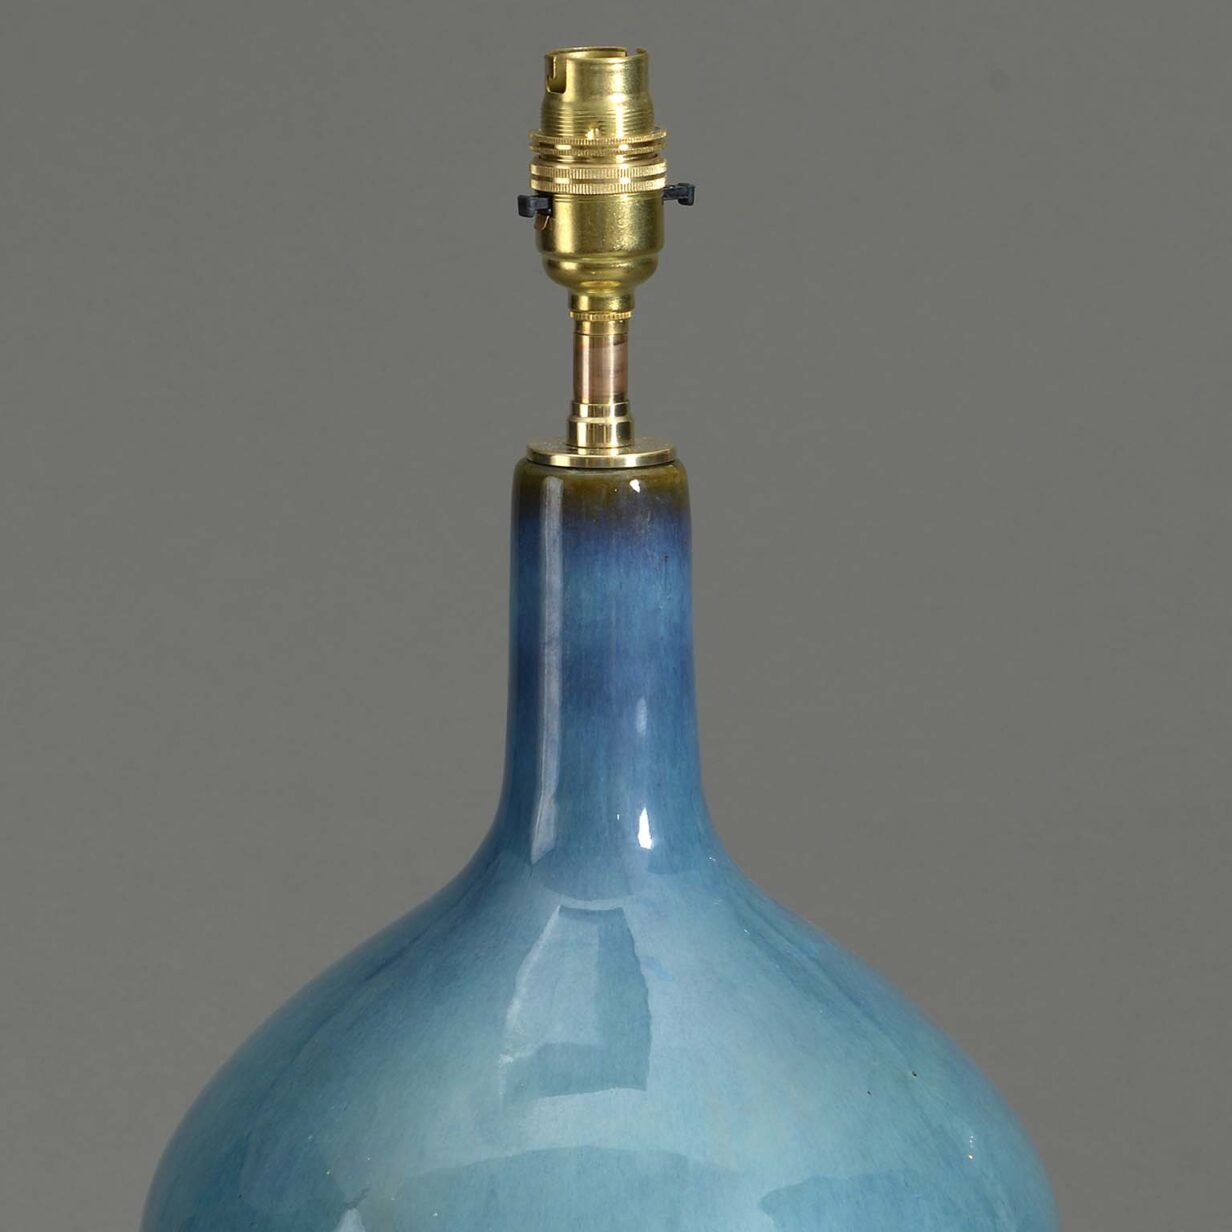 Turquoise vase lamp